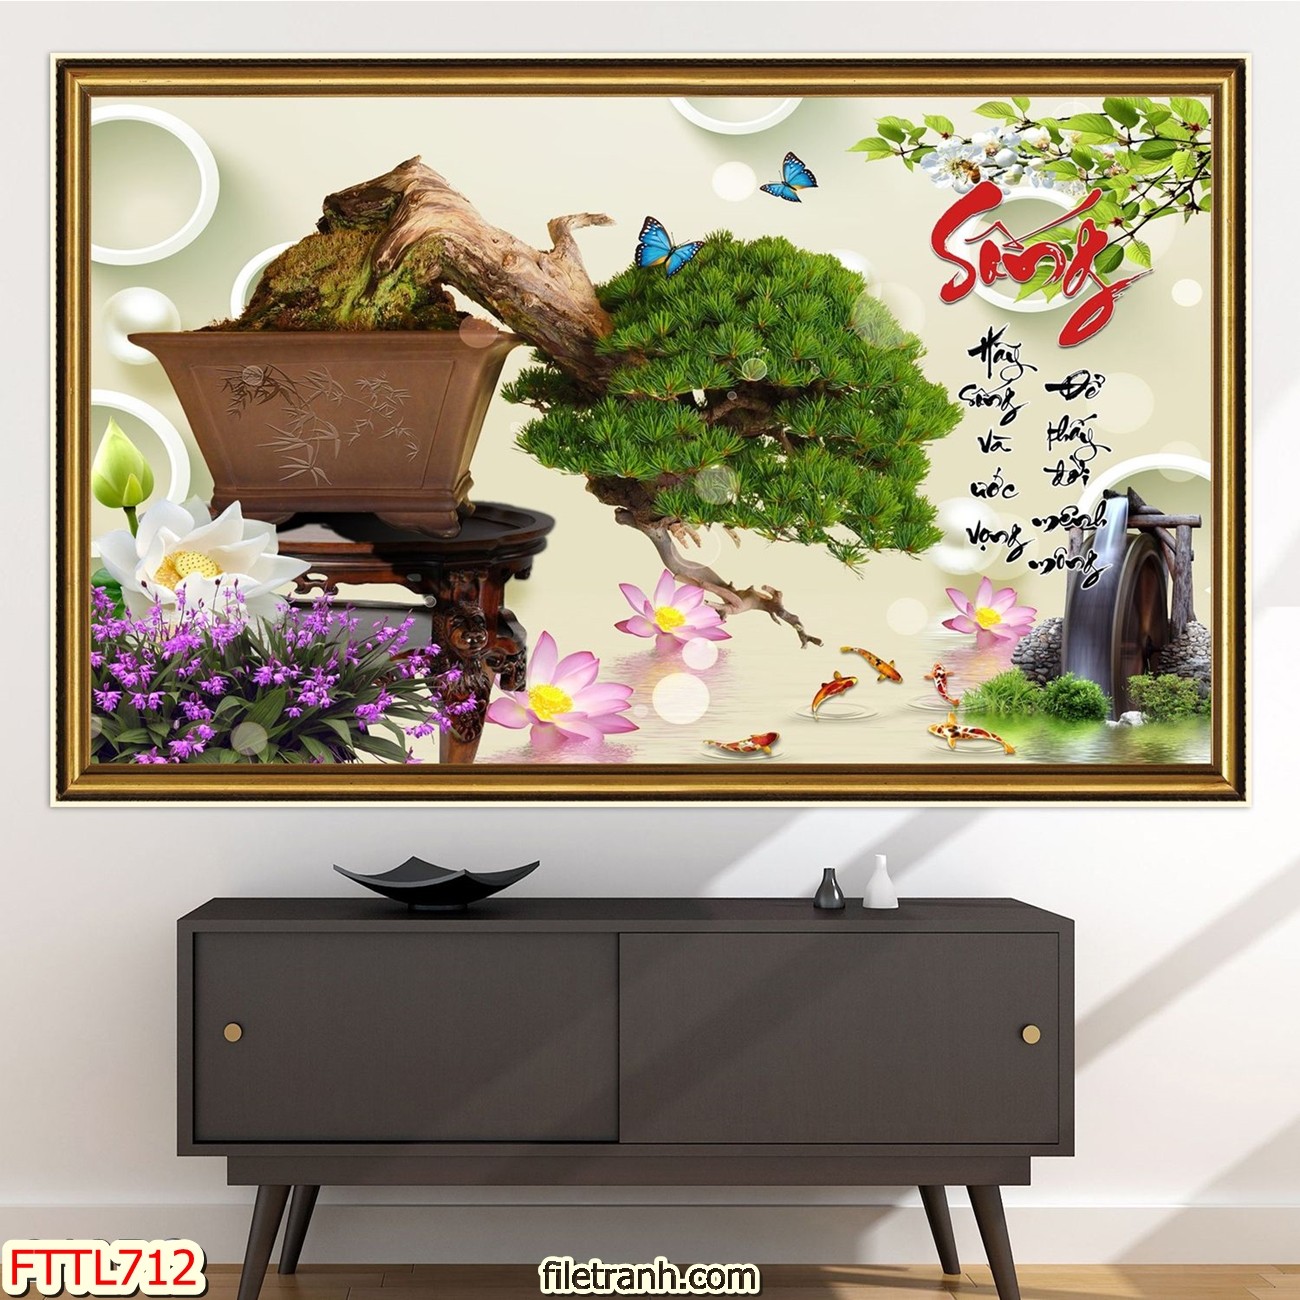 https://filetranh.com/file-tranh-chau-mai-bonsai/file-tranh-chau-mai-bonsai-fttl712.html